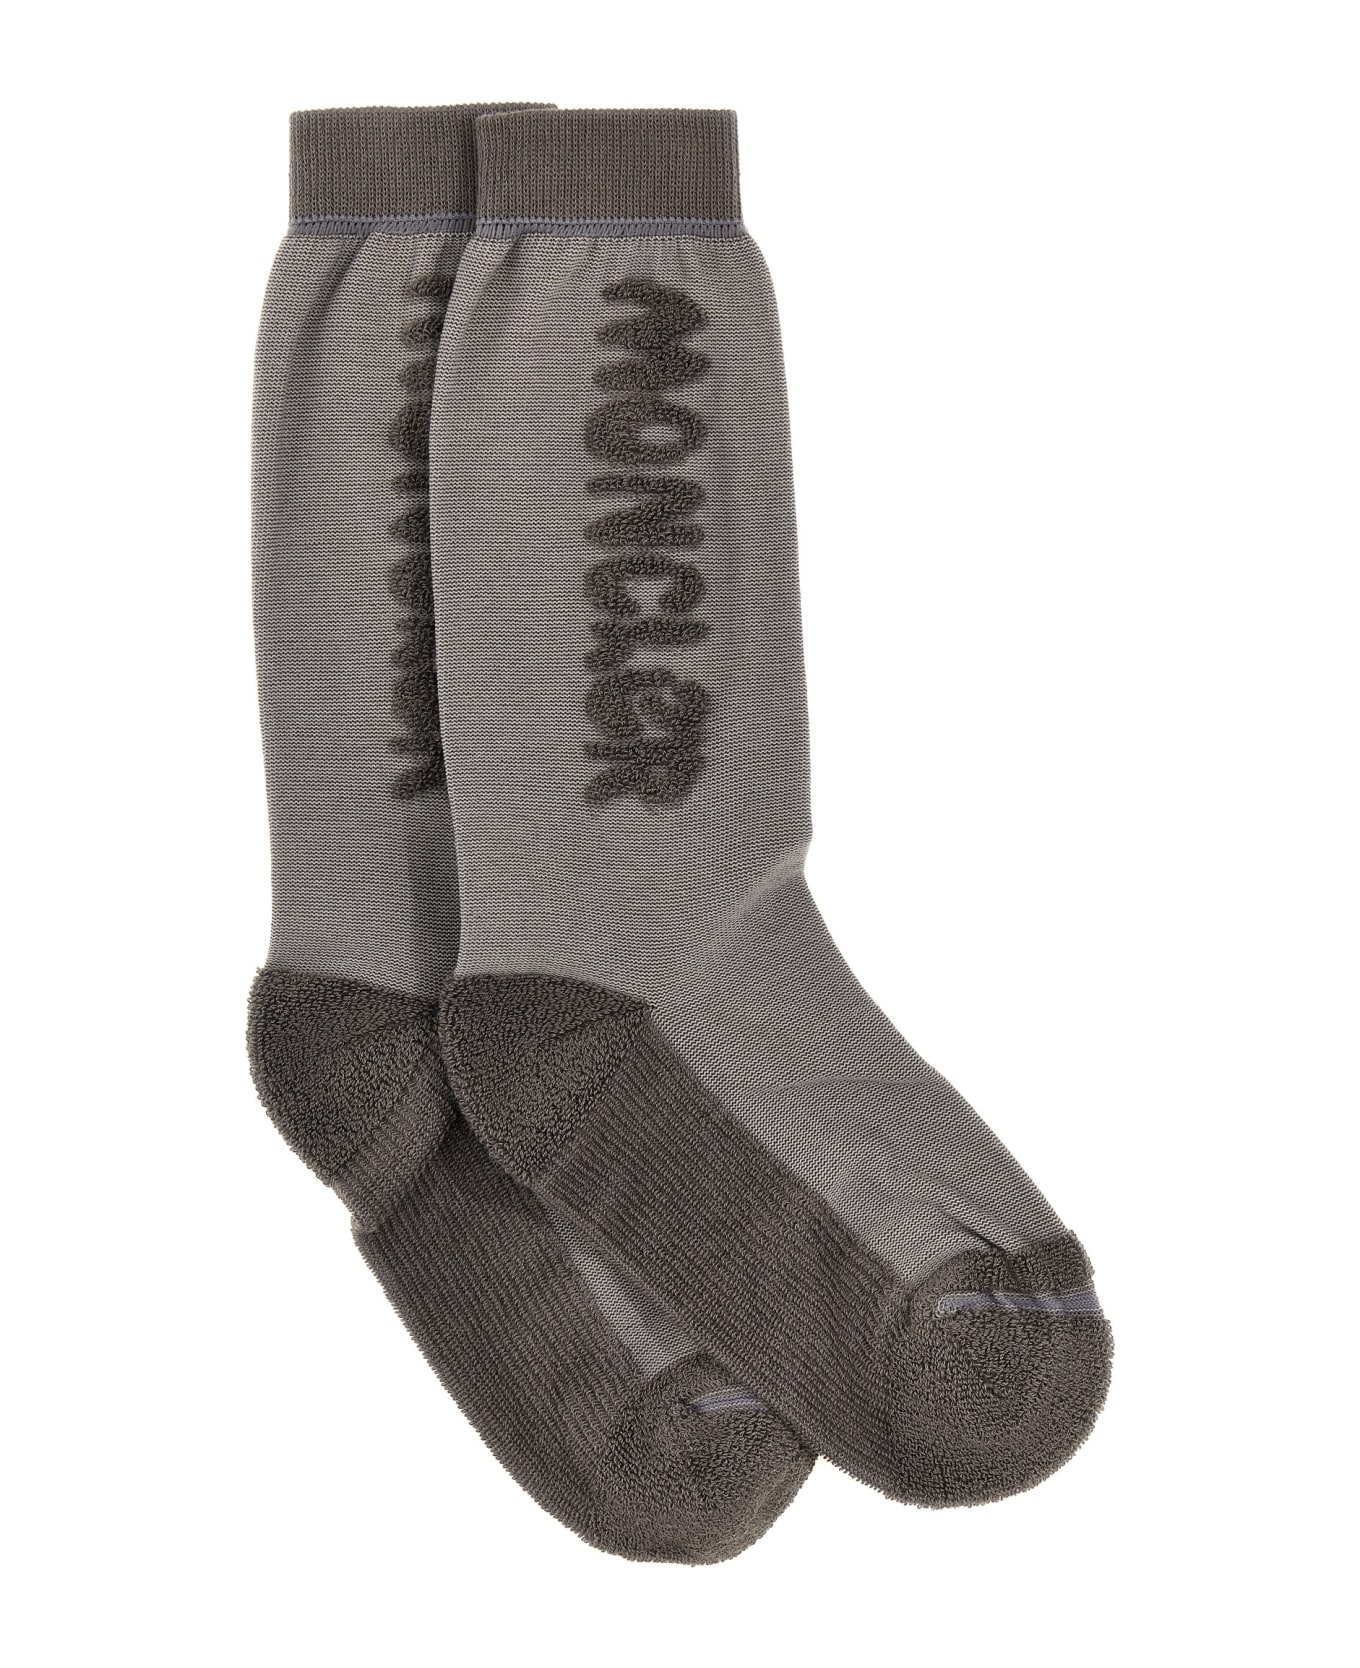 Moncler Genius X Salehe Bembury Socks - Gray